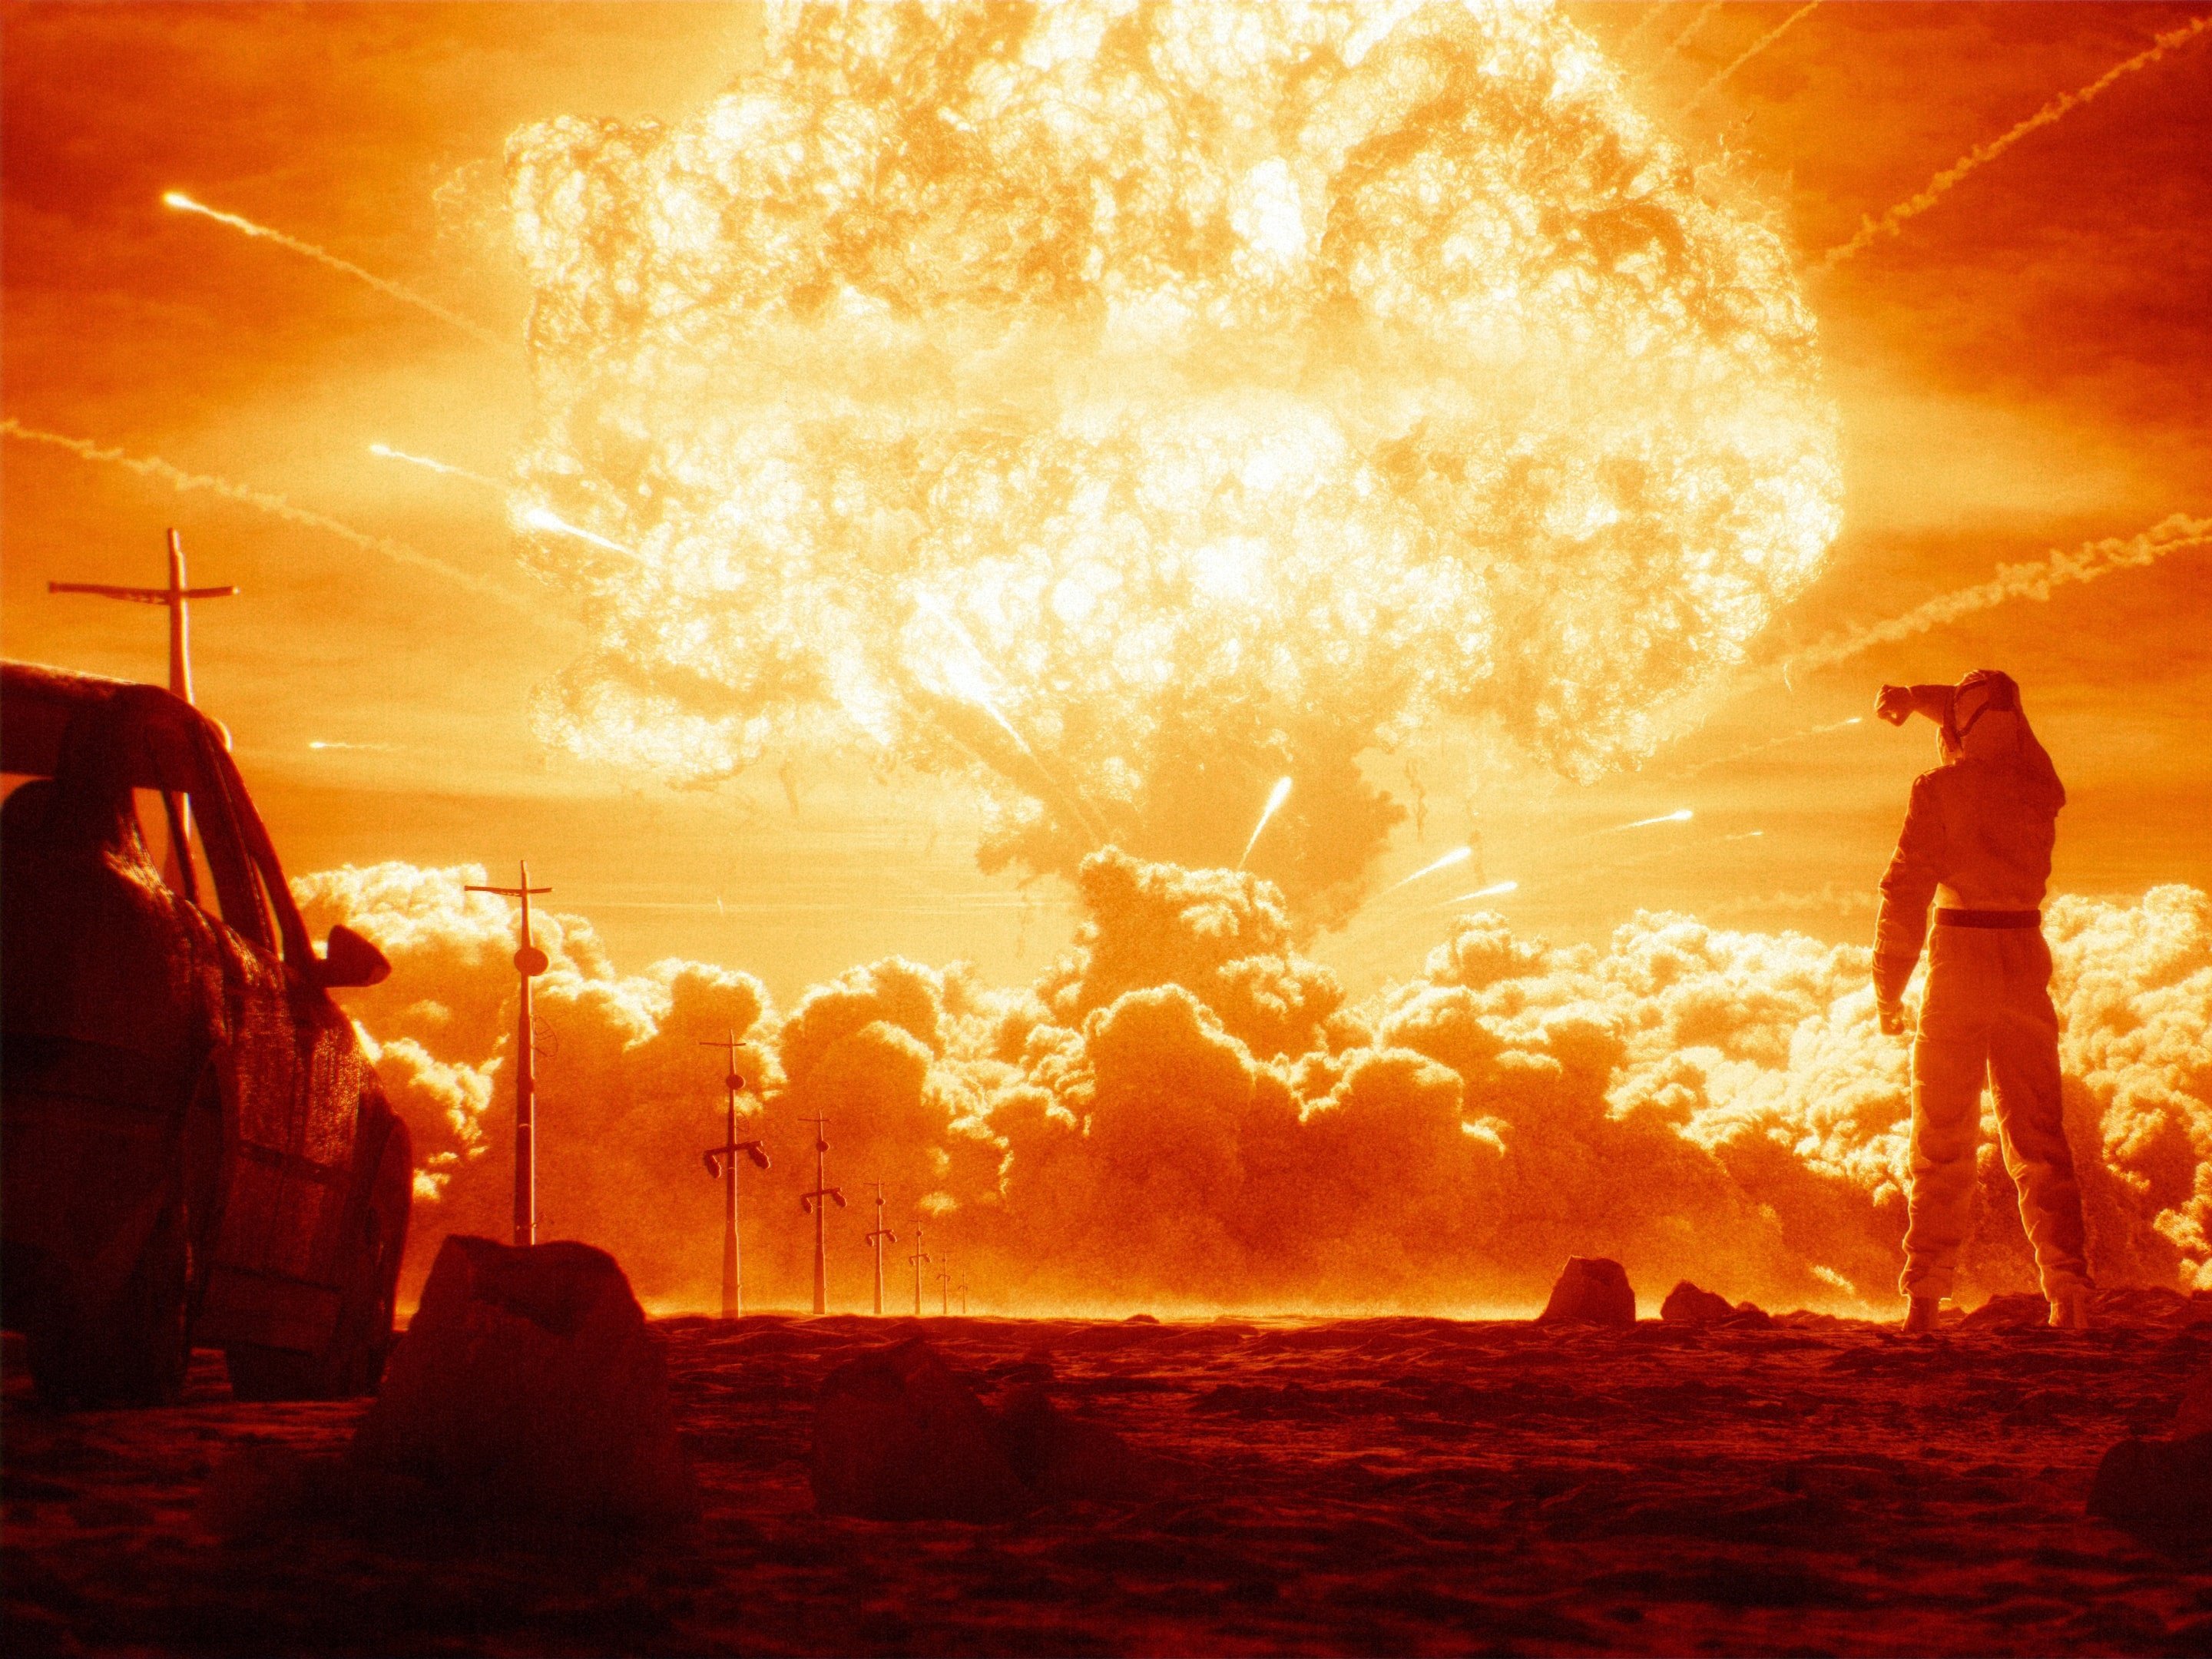 ww3 nucleaire atomique explosion atome apocalypse missile bombe guerre mondiale purification